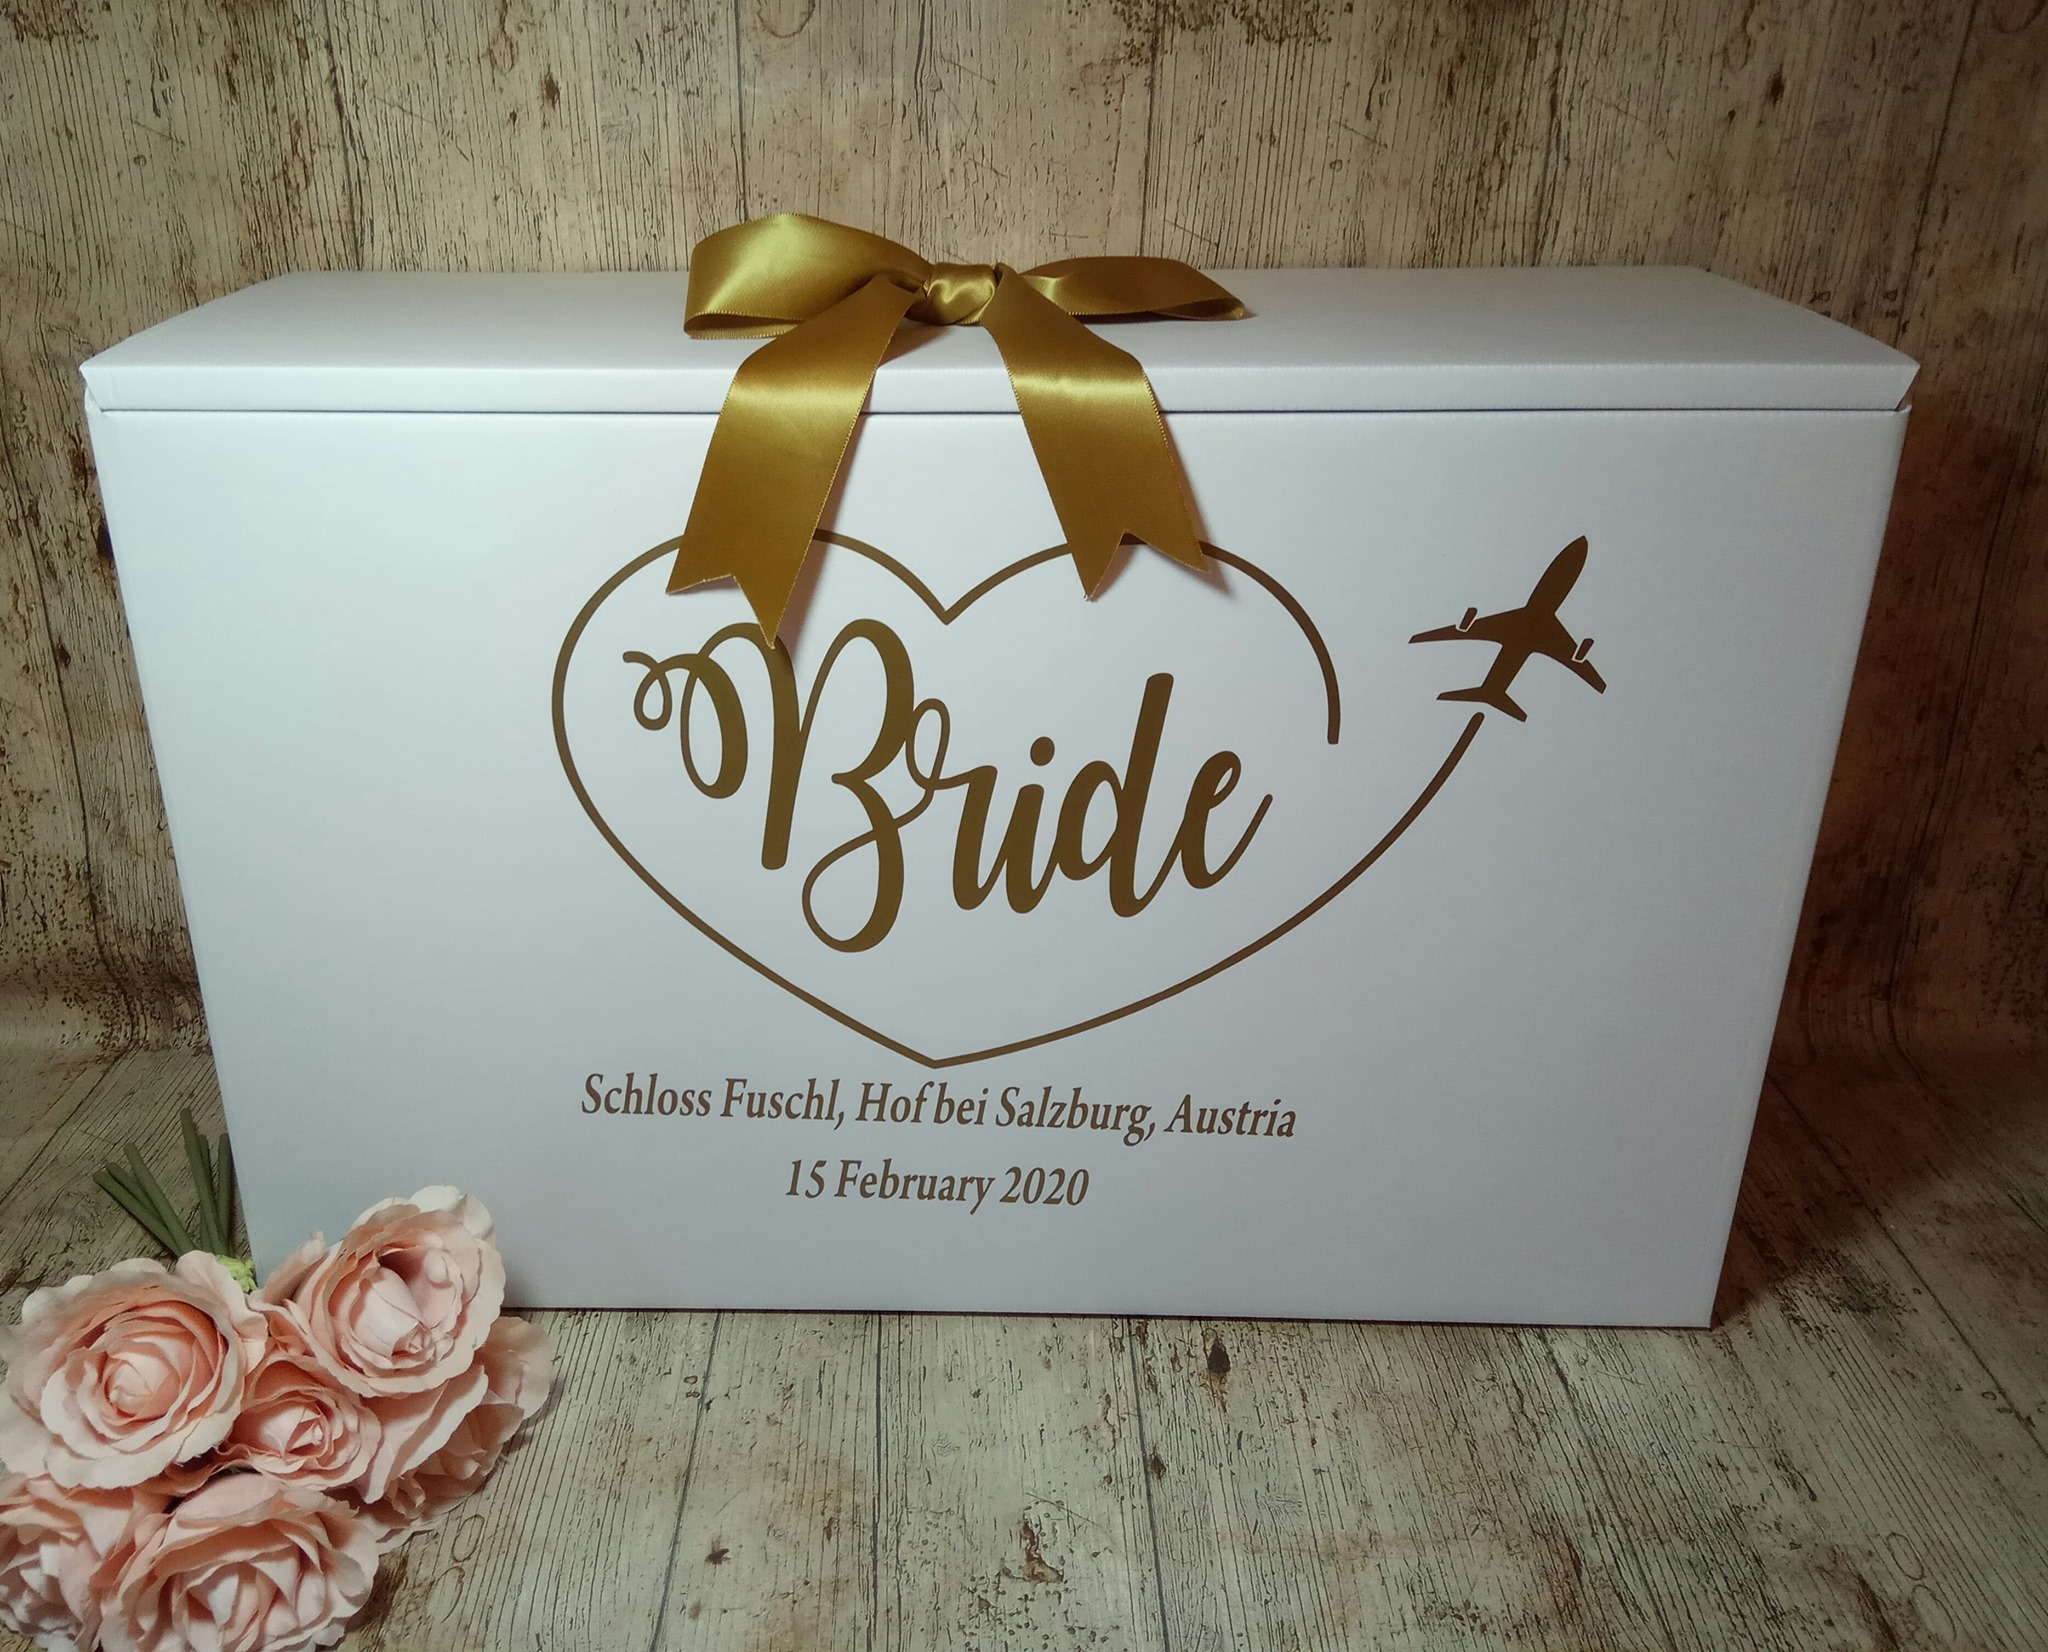 bridal-box-wedding-dress-travel-box-bride-heart-wedding-dress-box